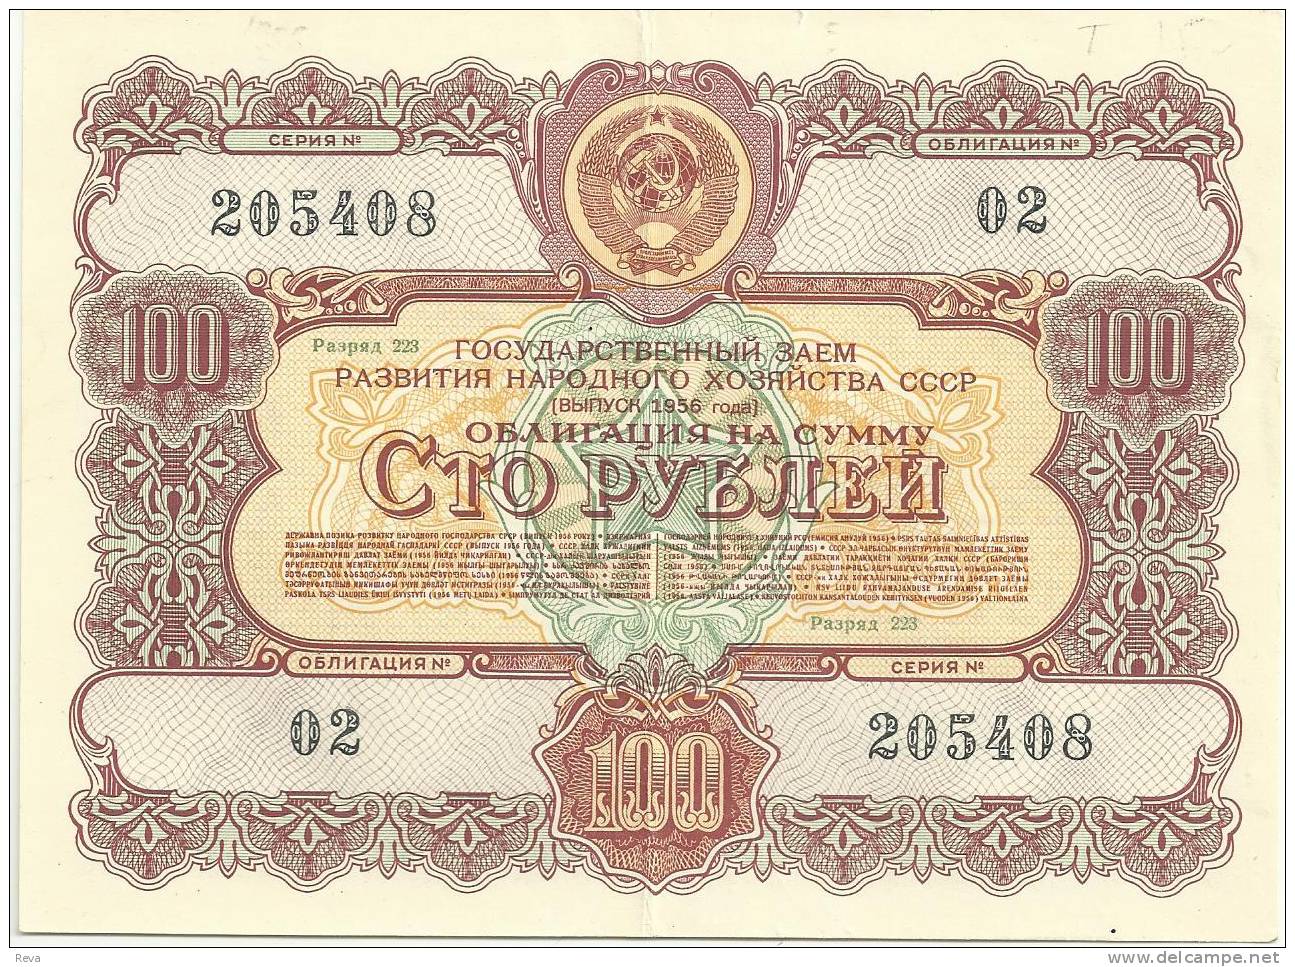 RUSSIA 100 RUBLEI PURPLE USSR EMBLEM FRONT INSCIPTIONS BACK TREASURY NOTE DATED 1956 P.S1687 VF READ DESCRIPTION !! - Russia